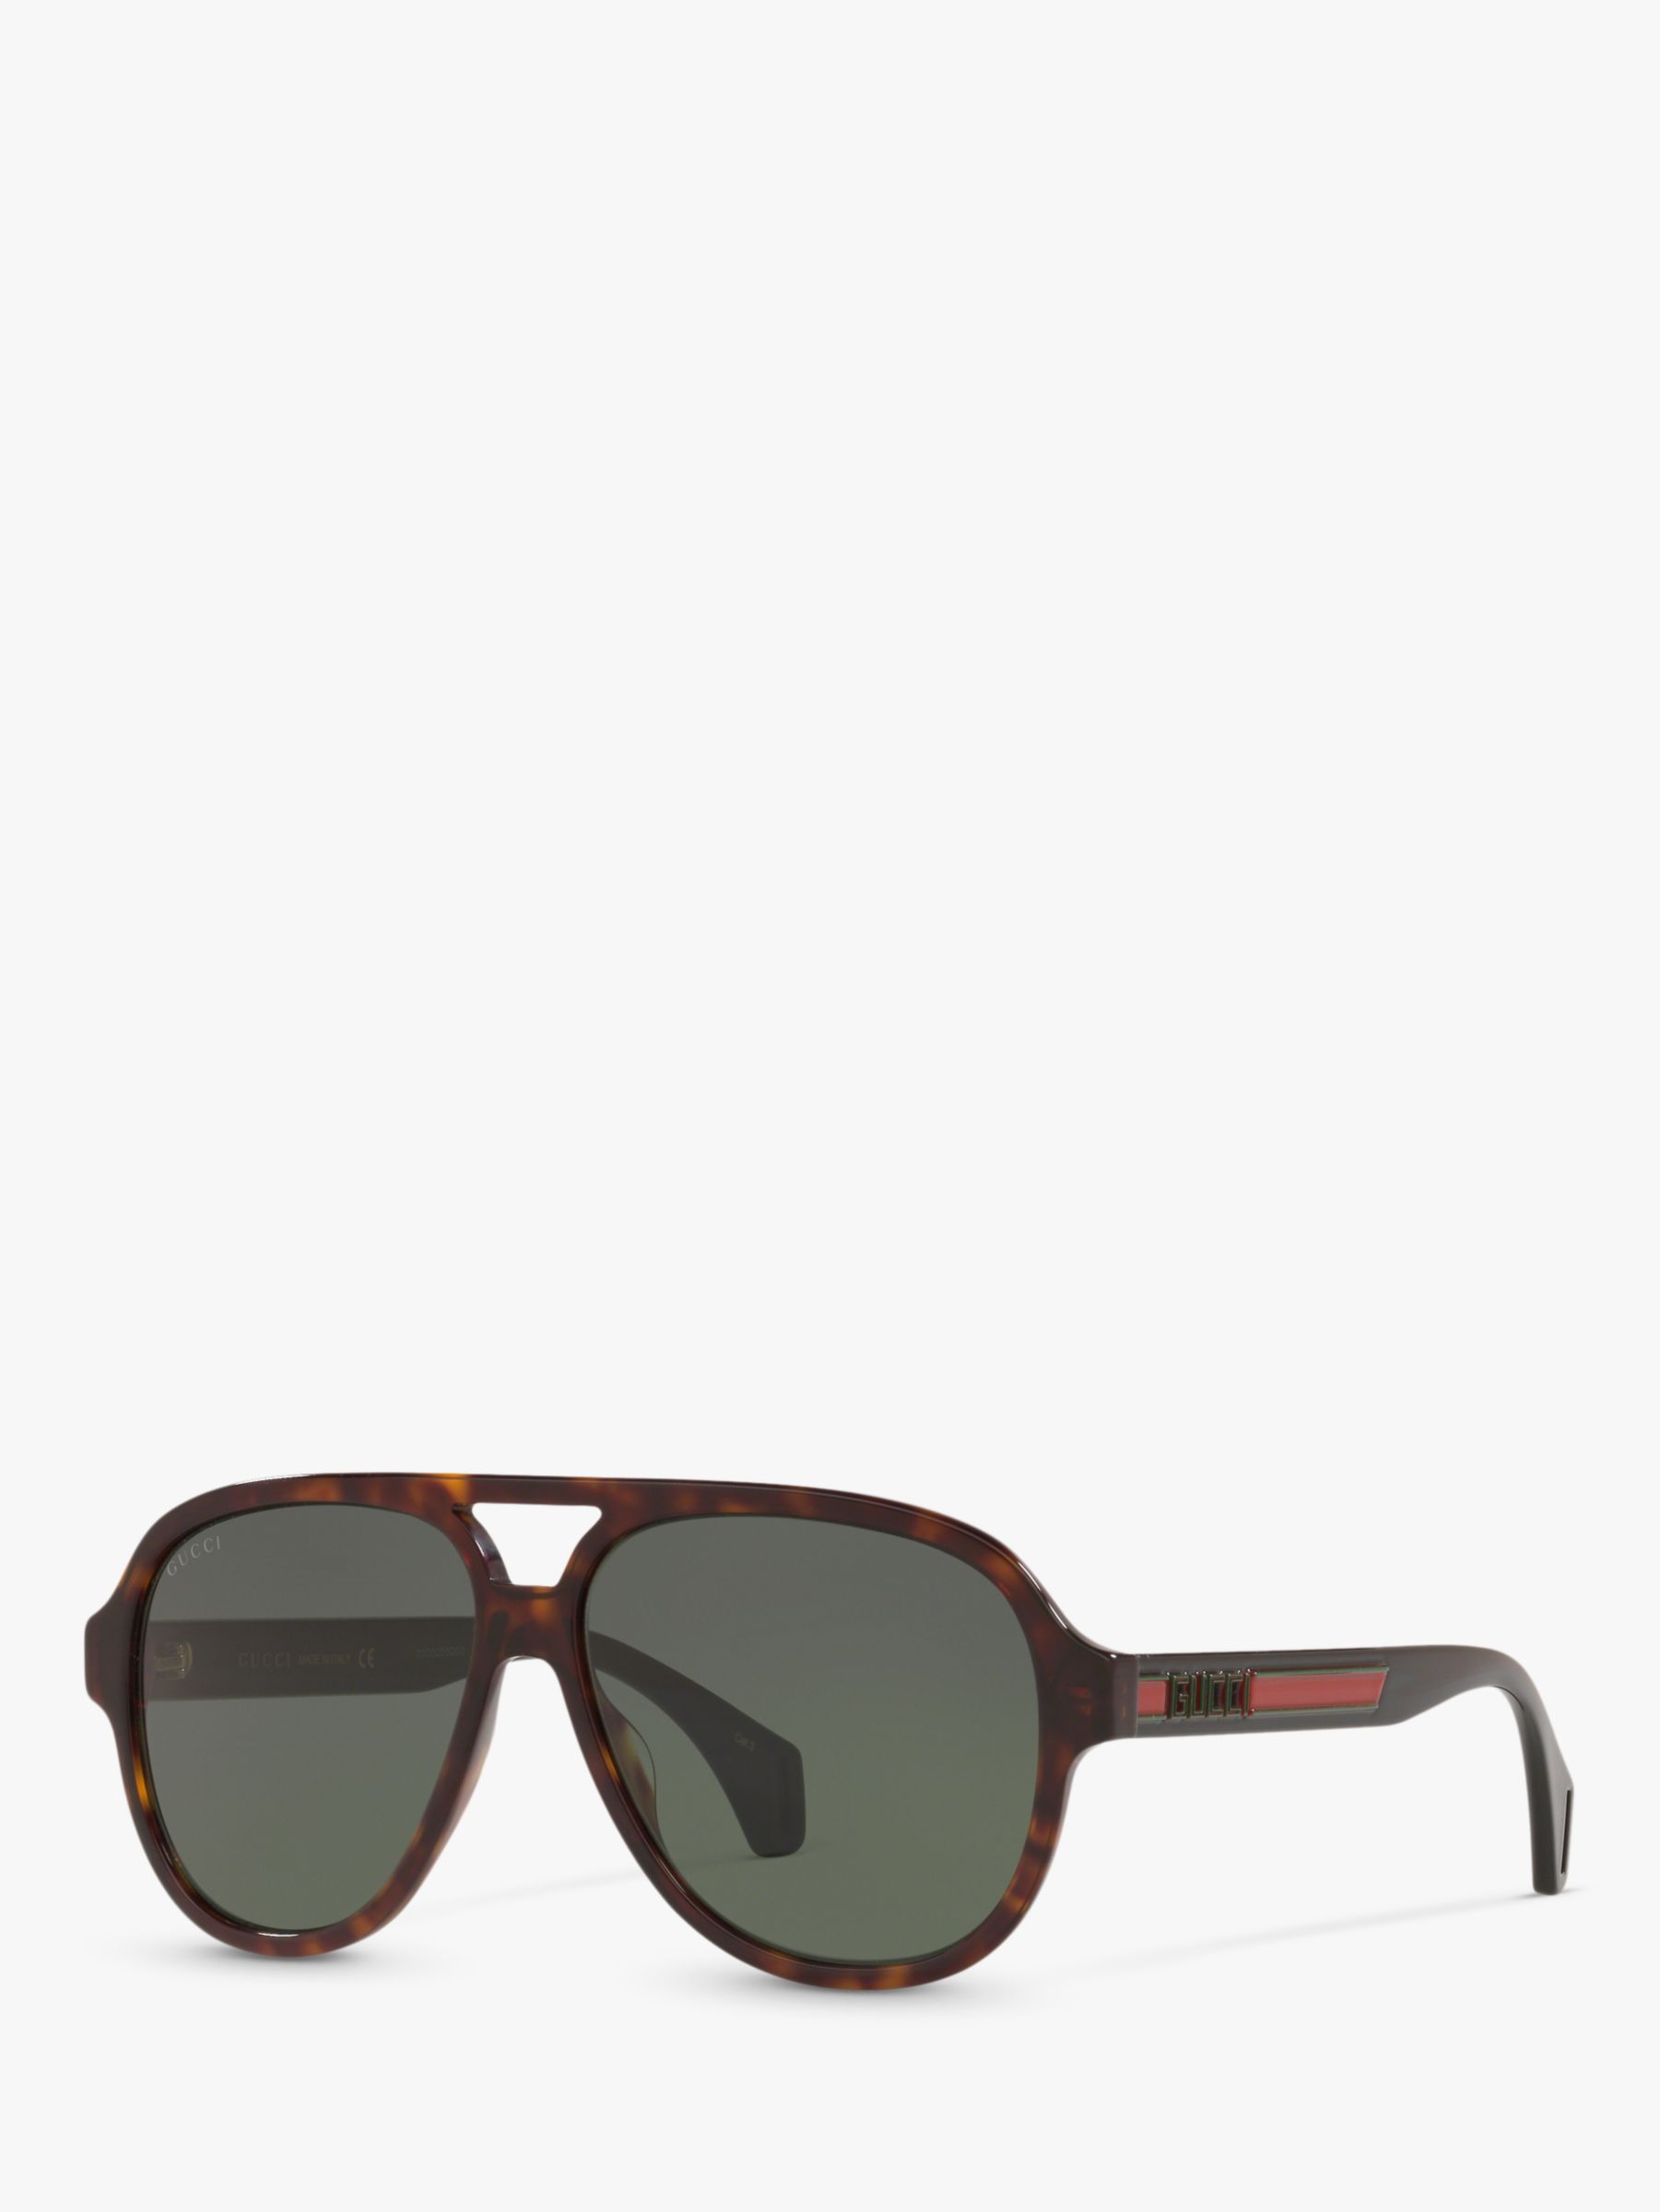 Gucci GG0463S Men's Aviator Sunglasses, Brown/Green at John Lewis & Partners